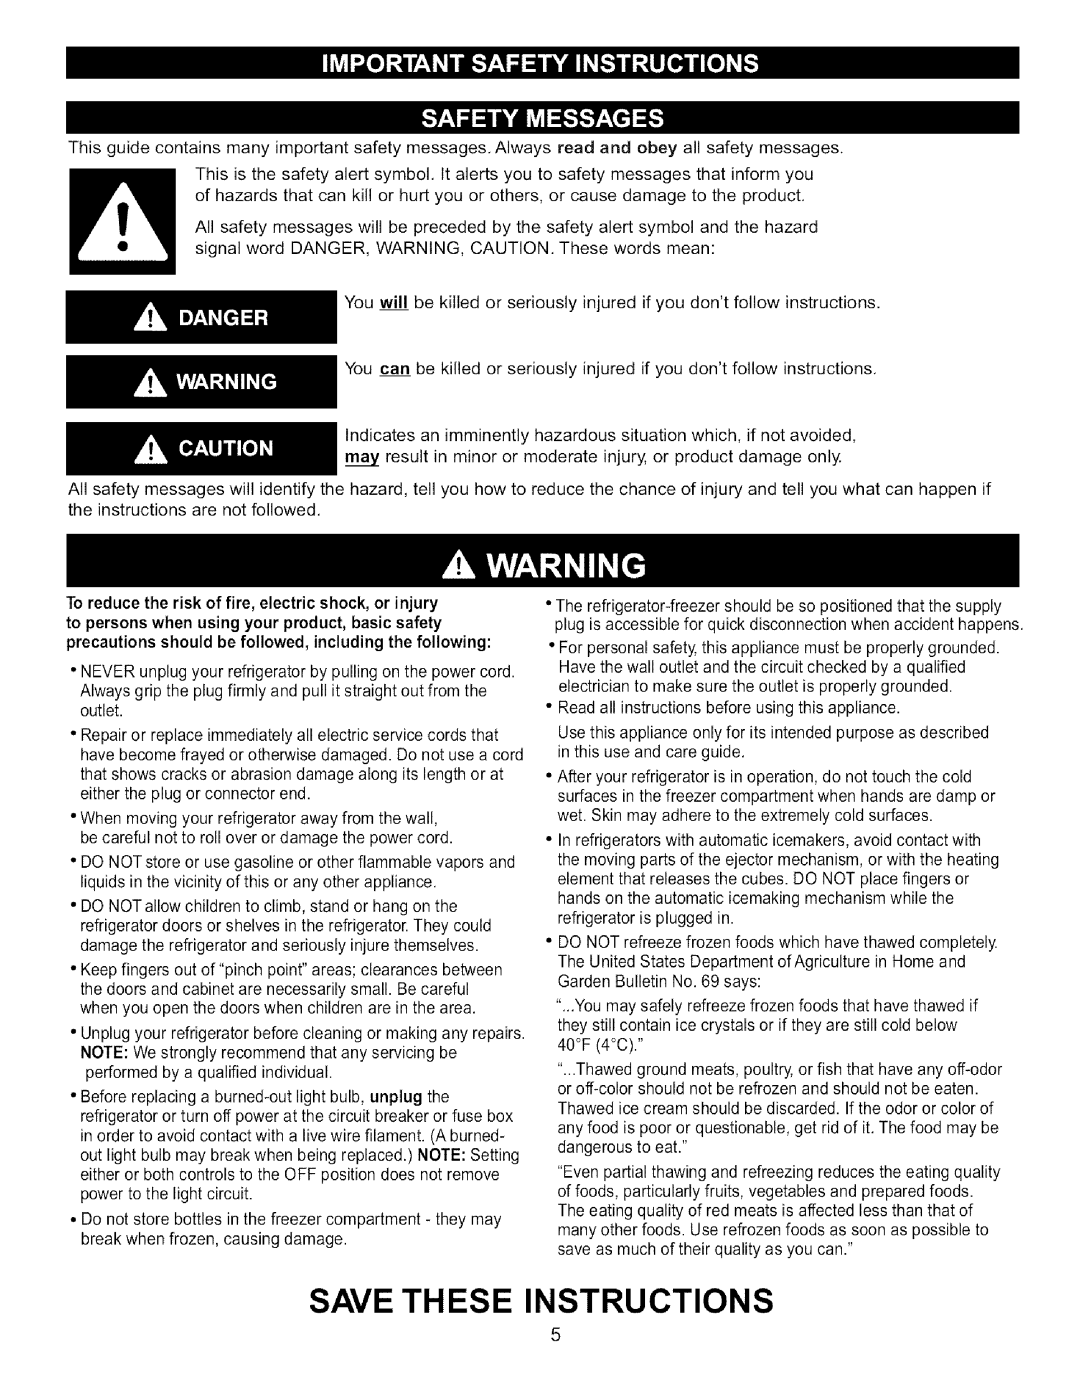 LG Electronics LFC22760 manual Save These Instructions 